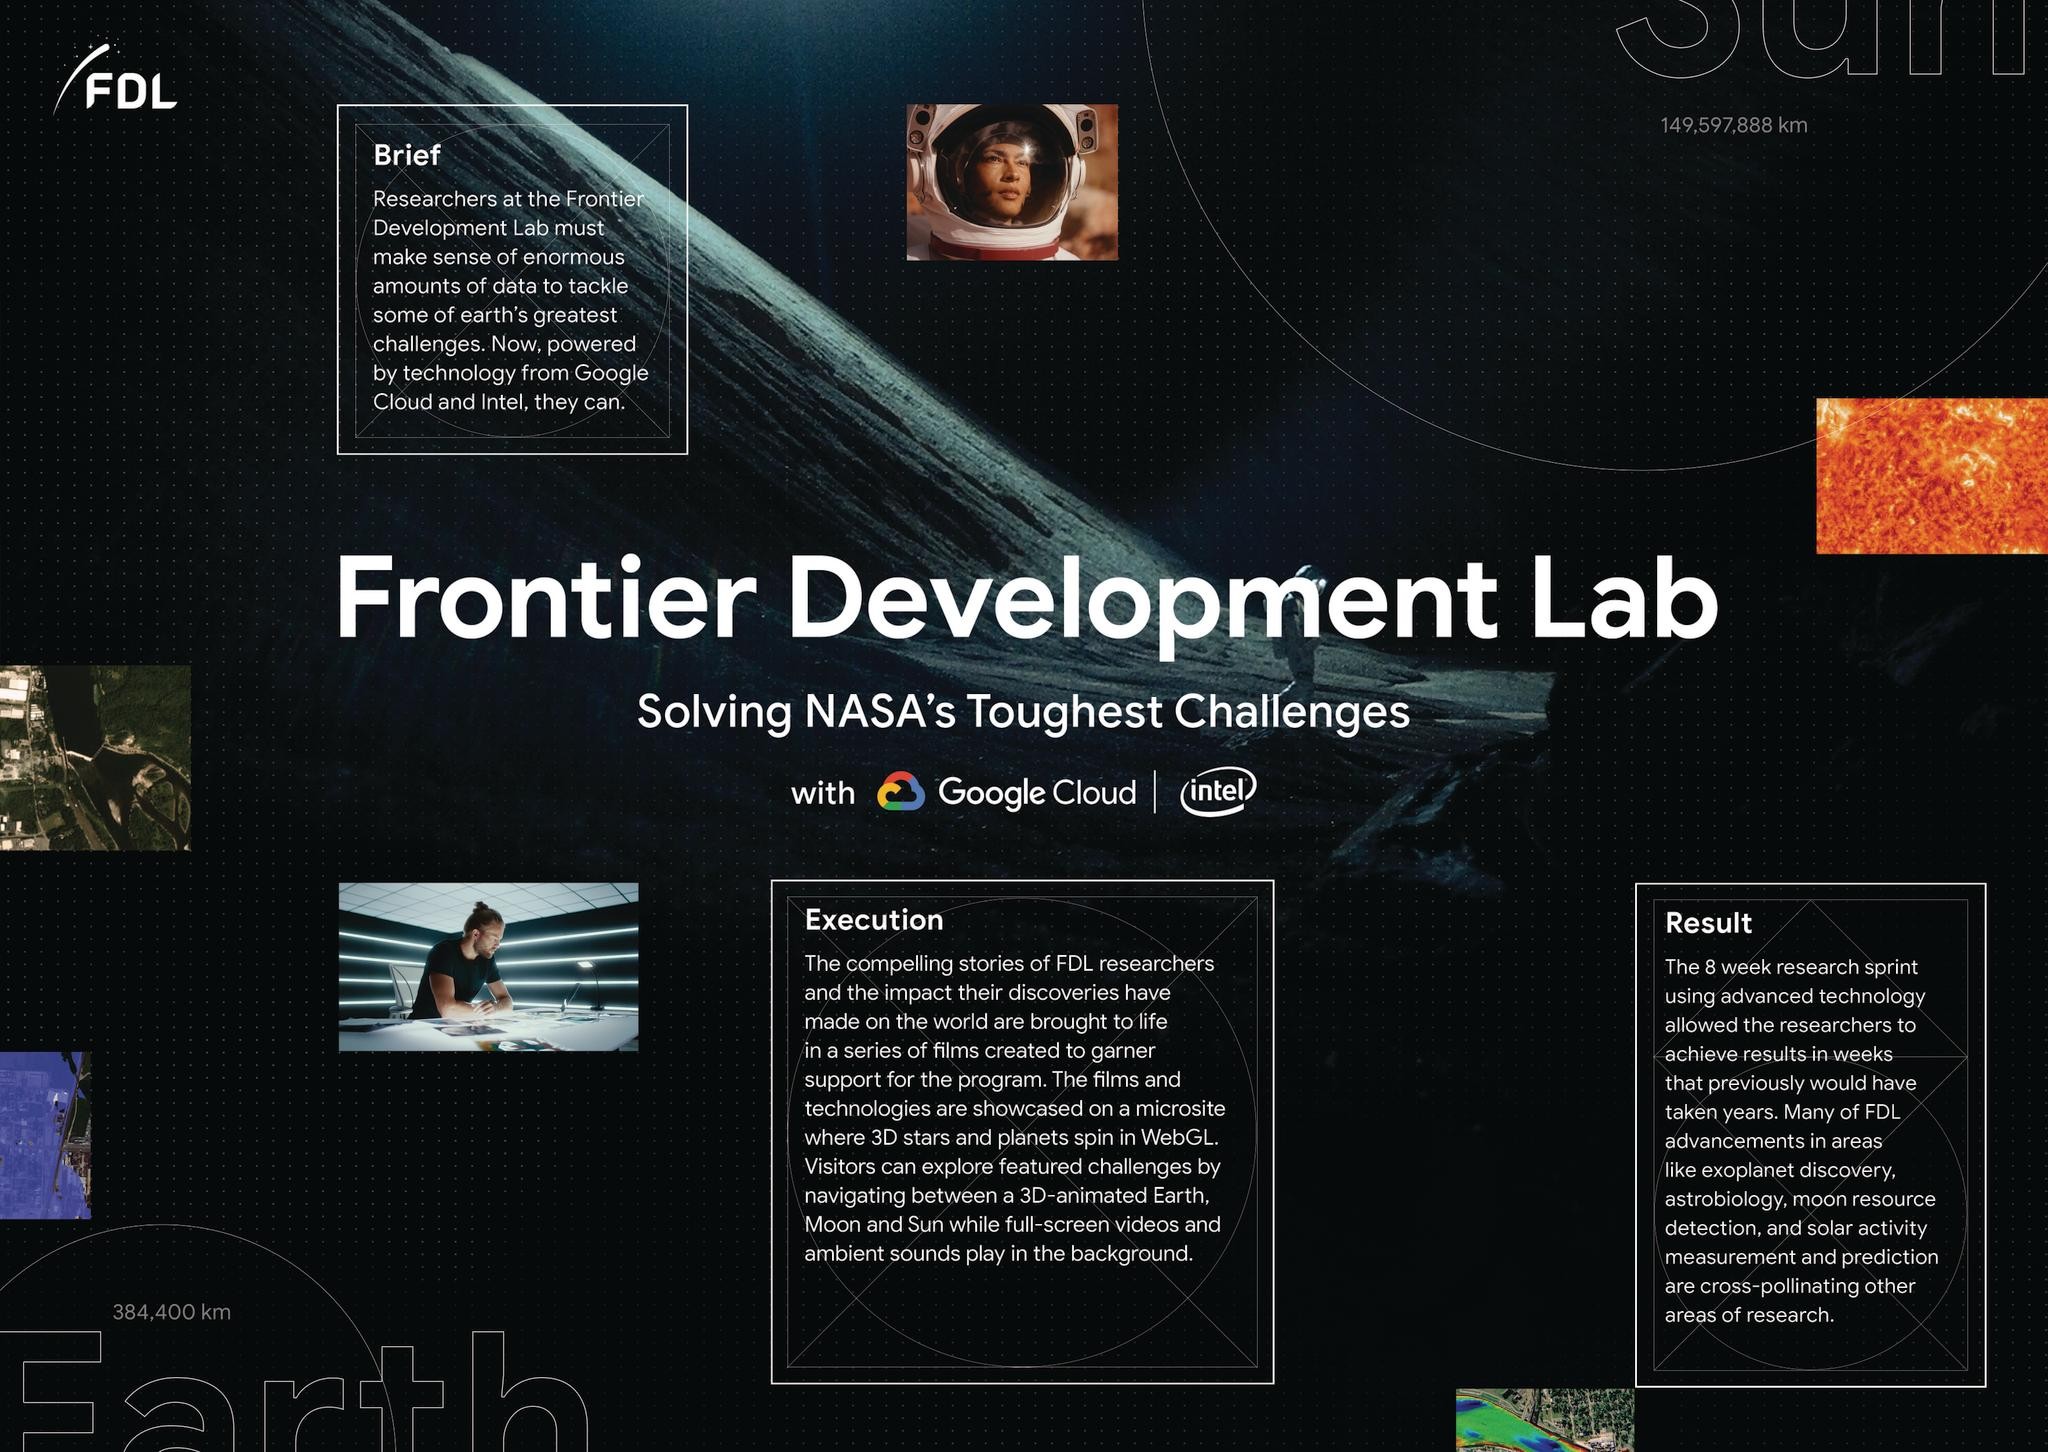 NASA's Frontier Development Lab